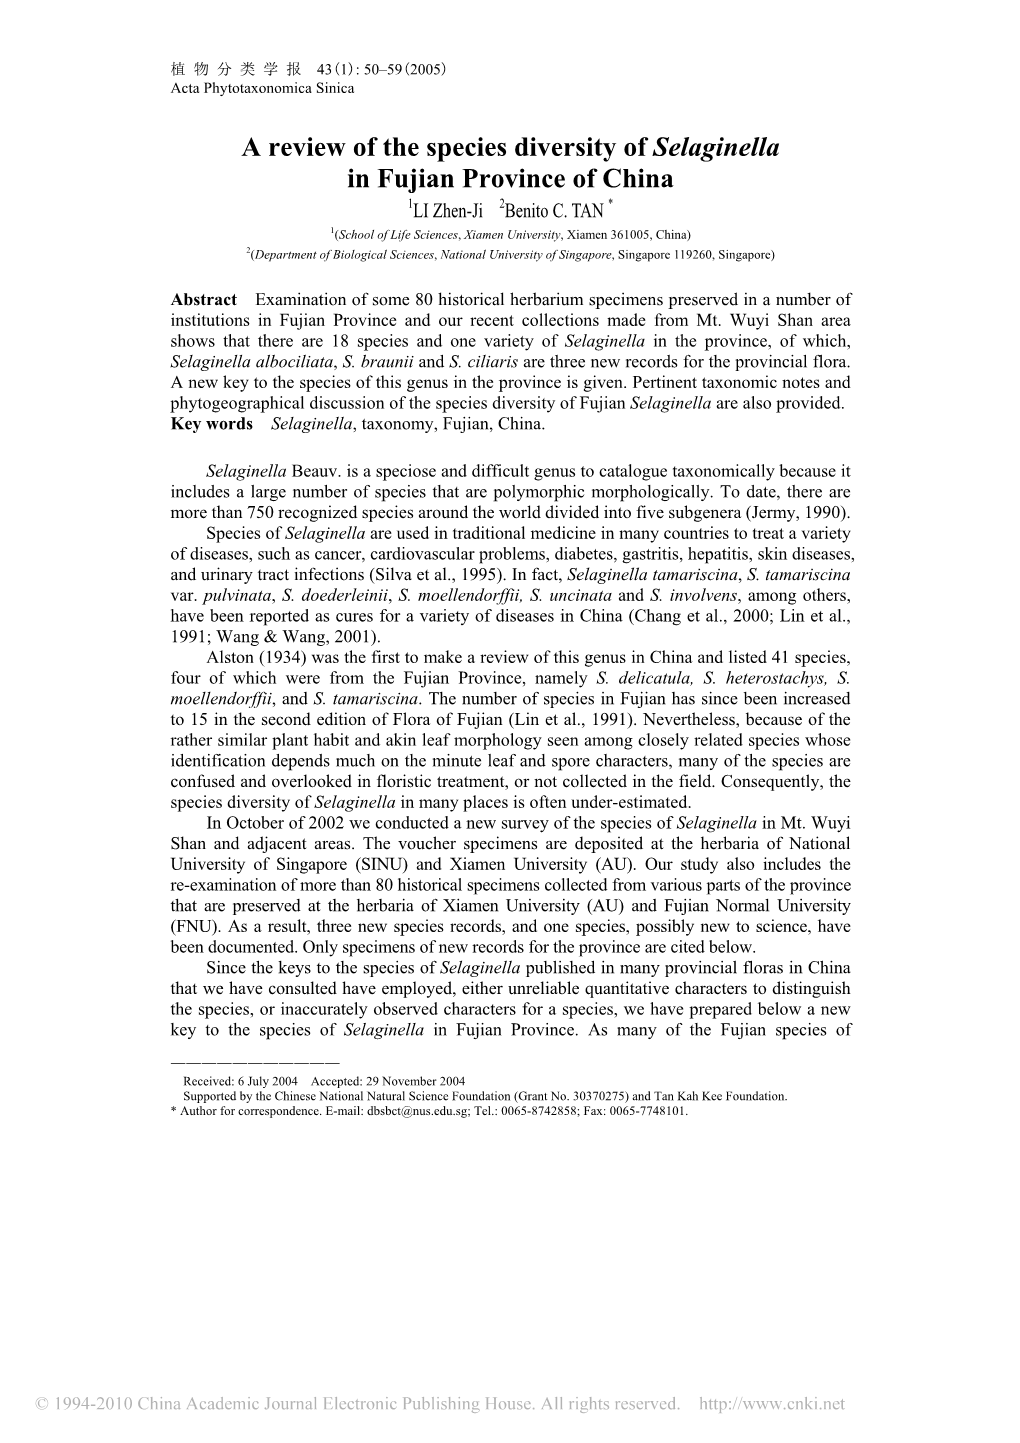 A Review of the Species Diversity of Selaginella in Fujian Province of China 1LI Zhen-Ji 2Benito C